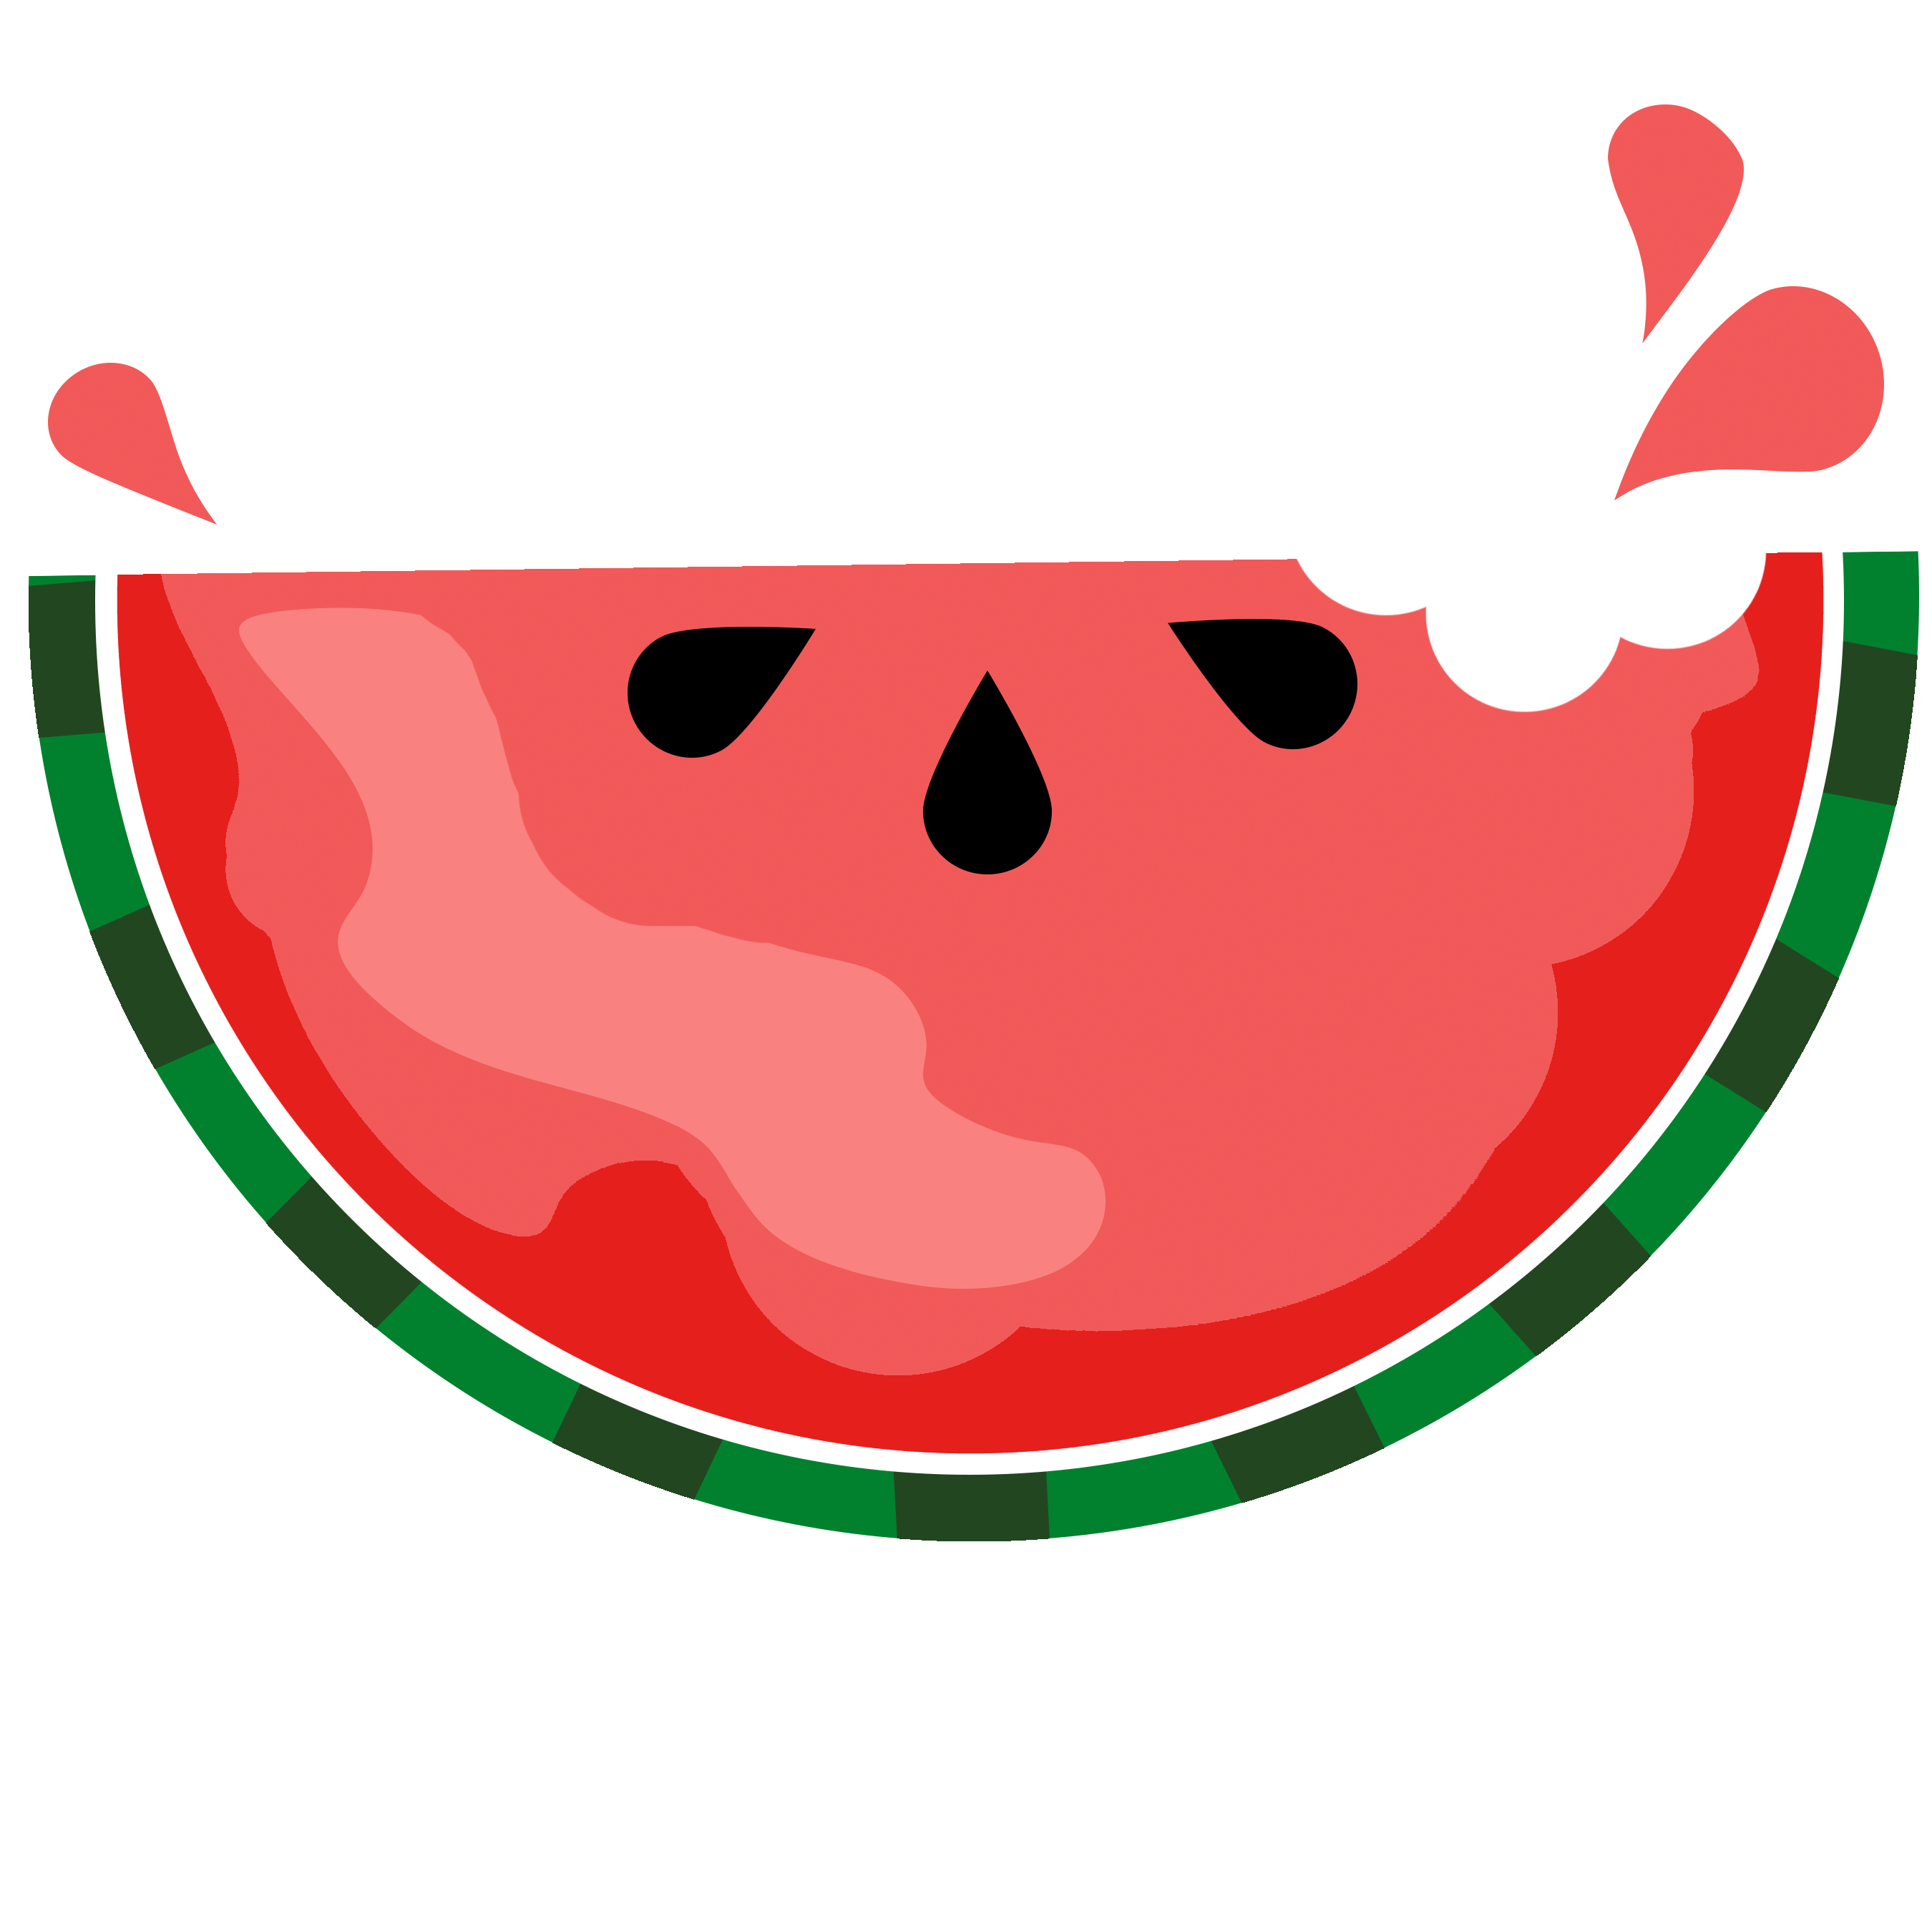 Cliparts zone . Watermelon clipart juicy watermelon